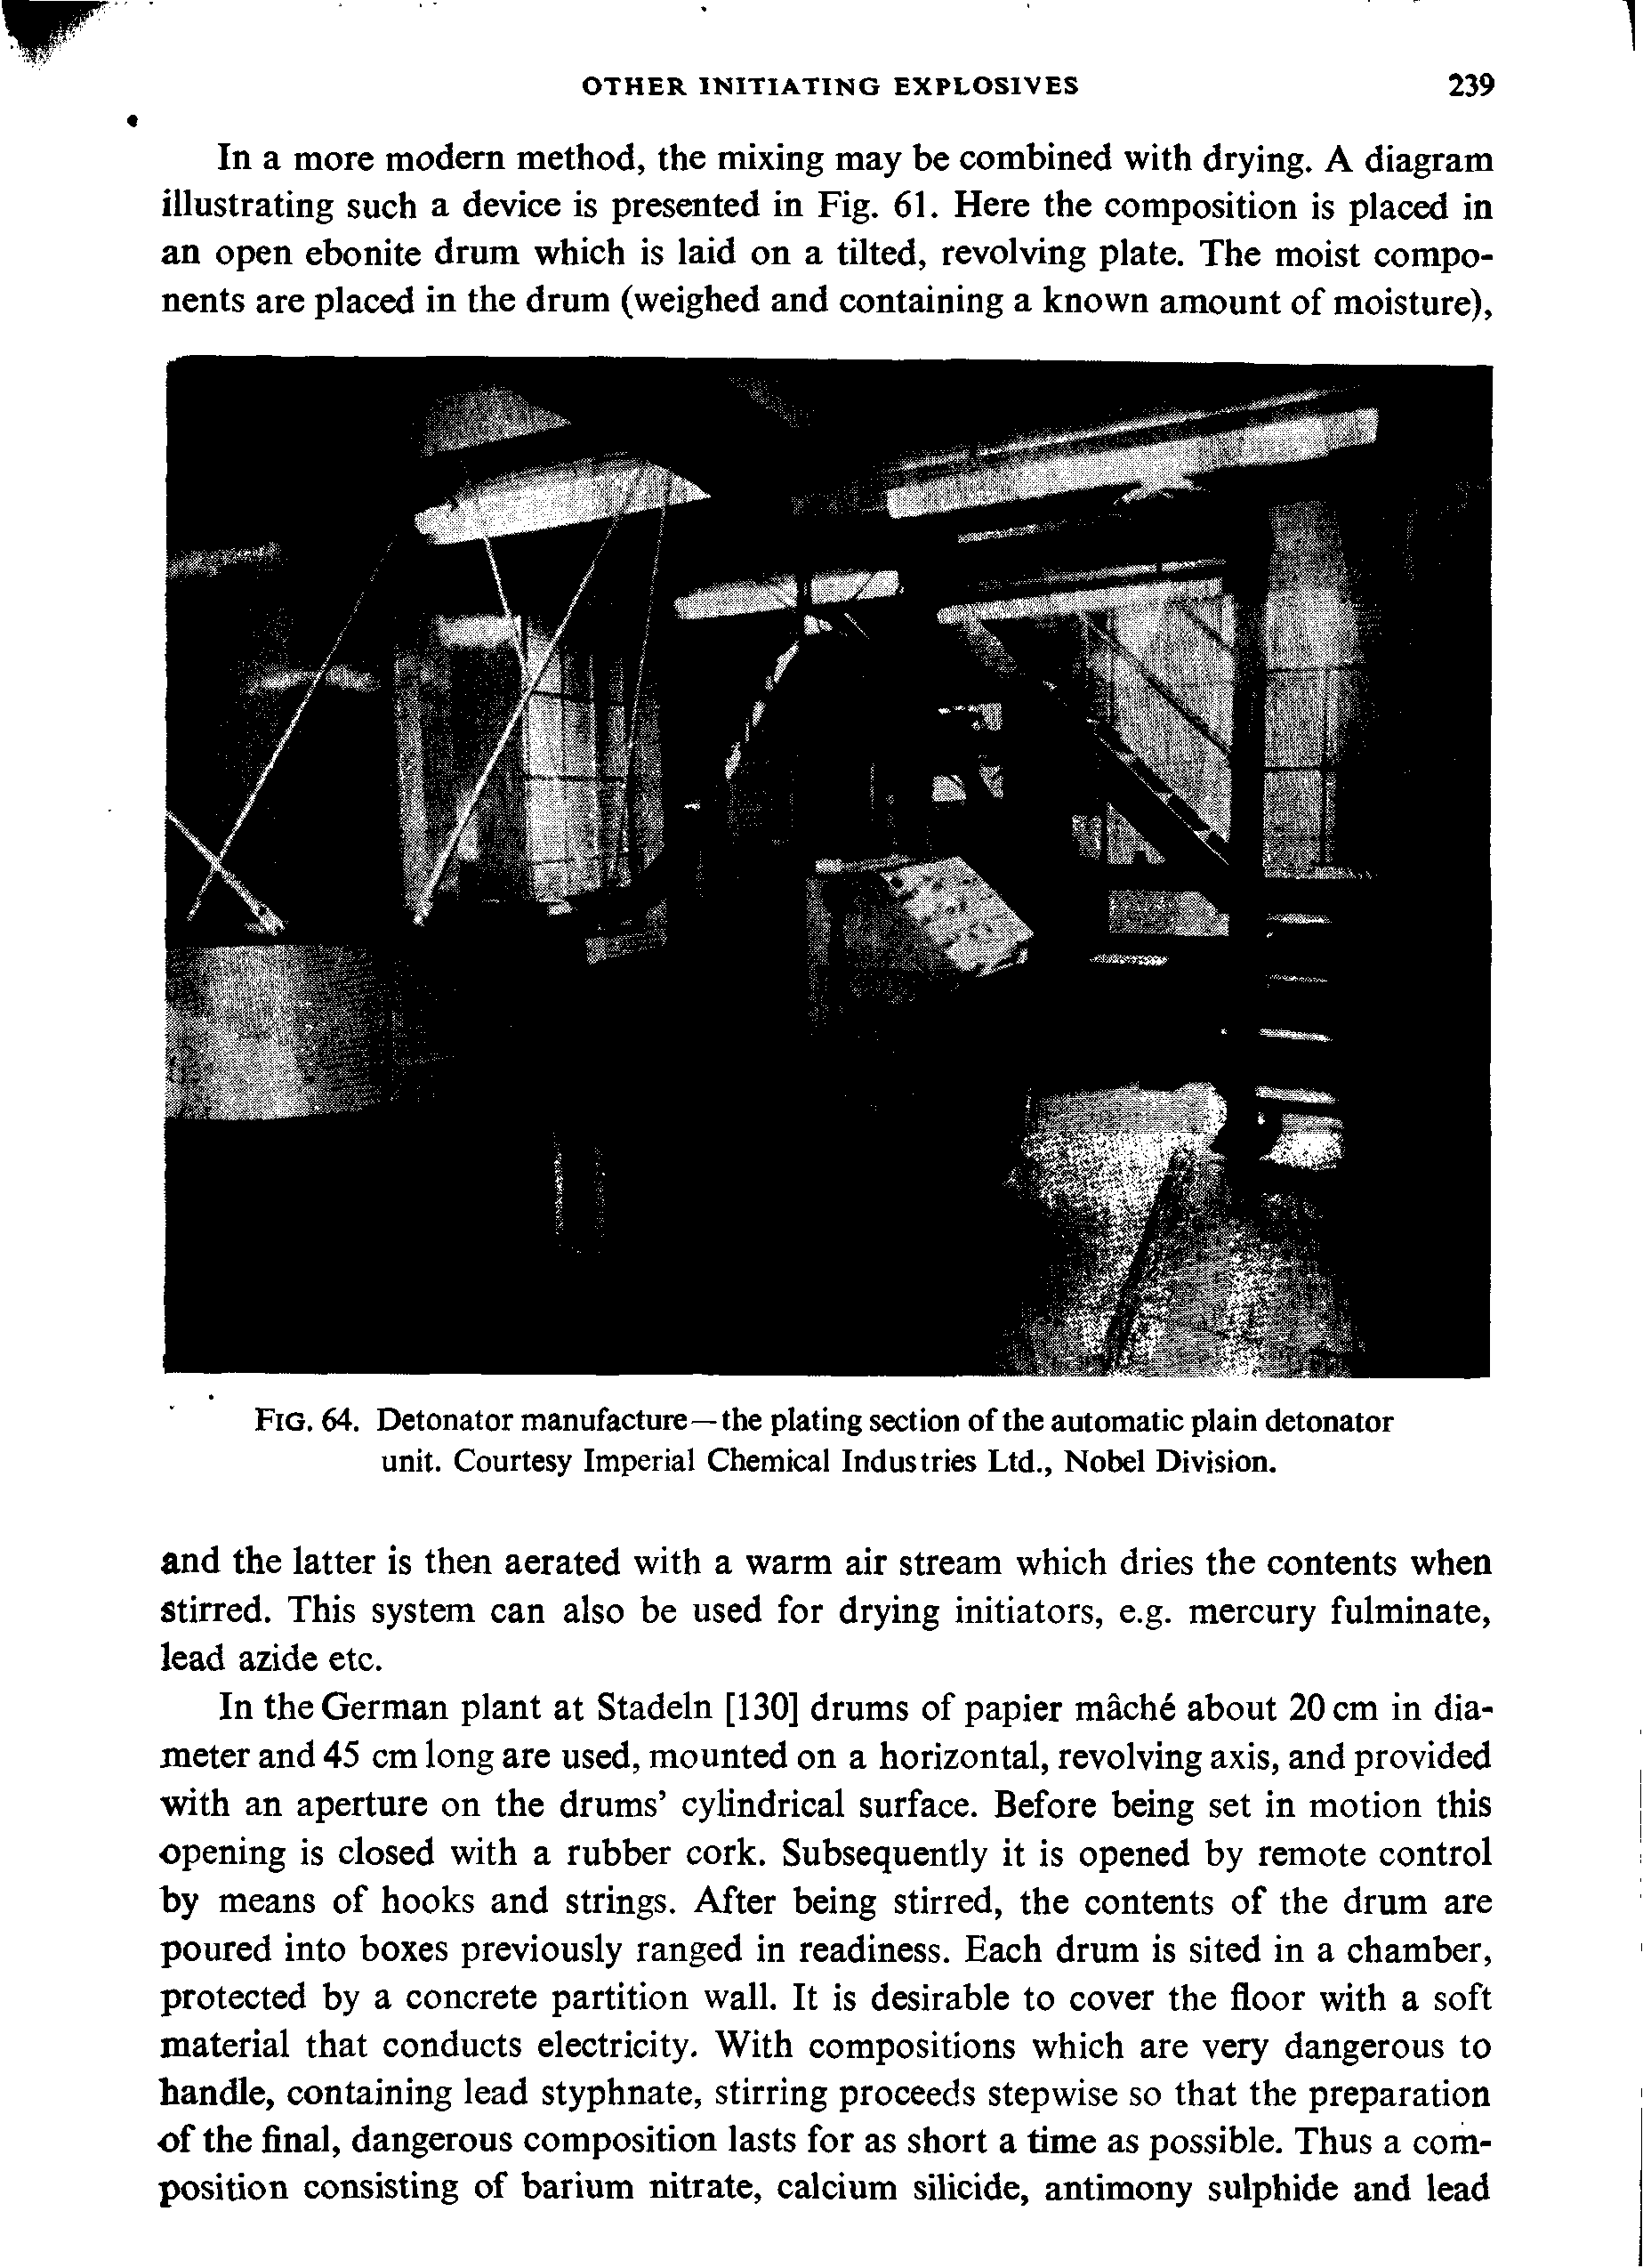 Fig. 64. Detonator manufacture—the plating section of the automatic plain detonator unit. Courtesy Imperial Chemical Industries Ltd., Nobel Division.